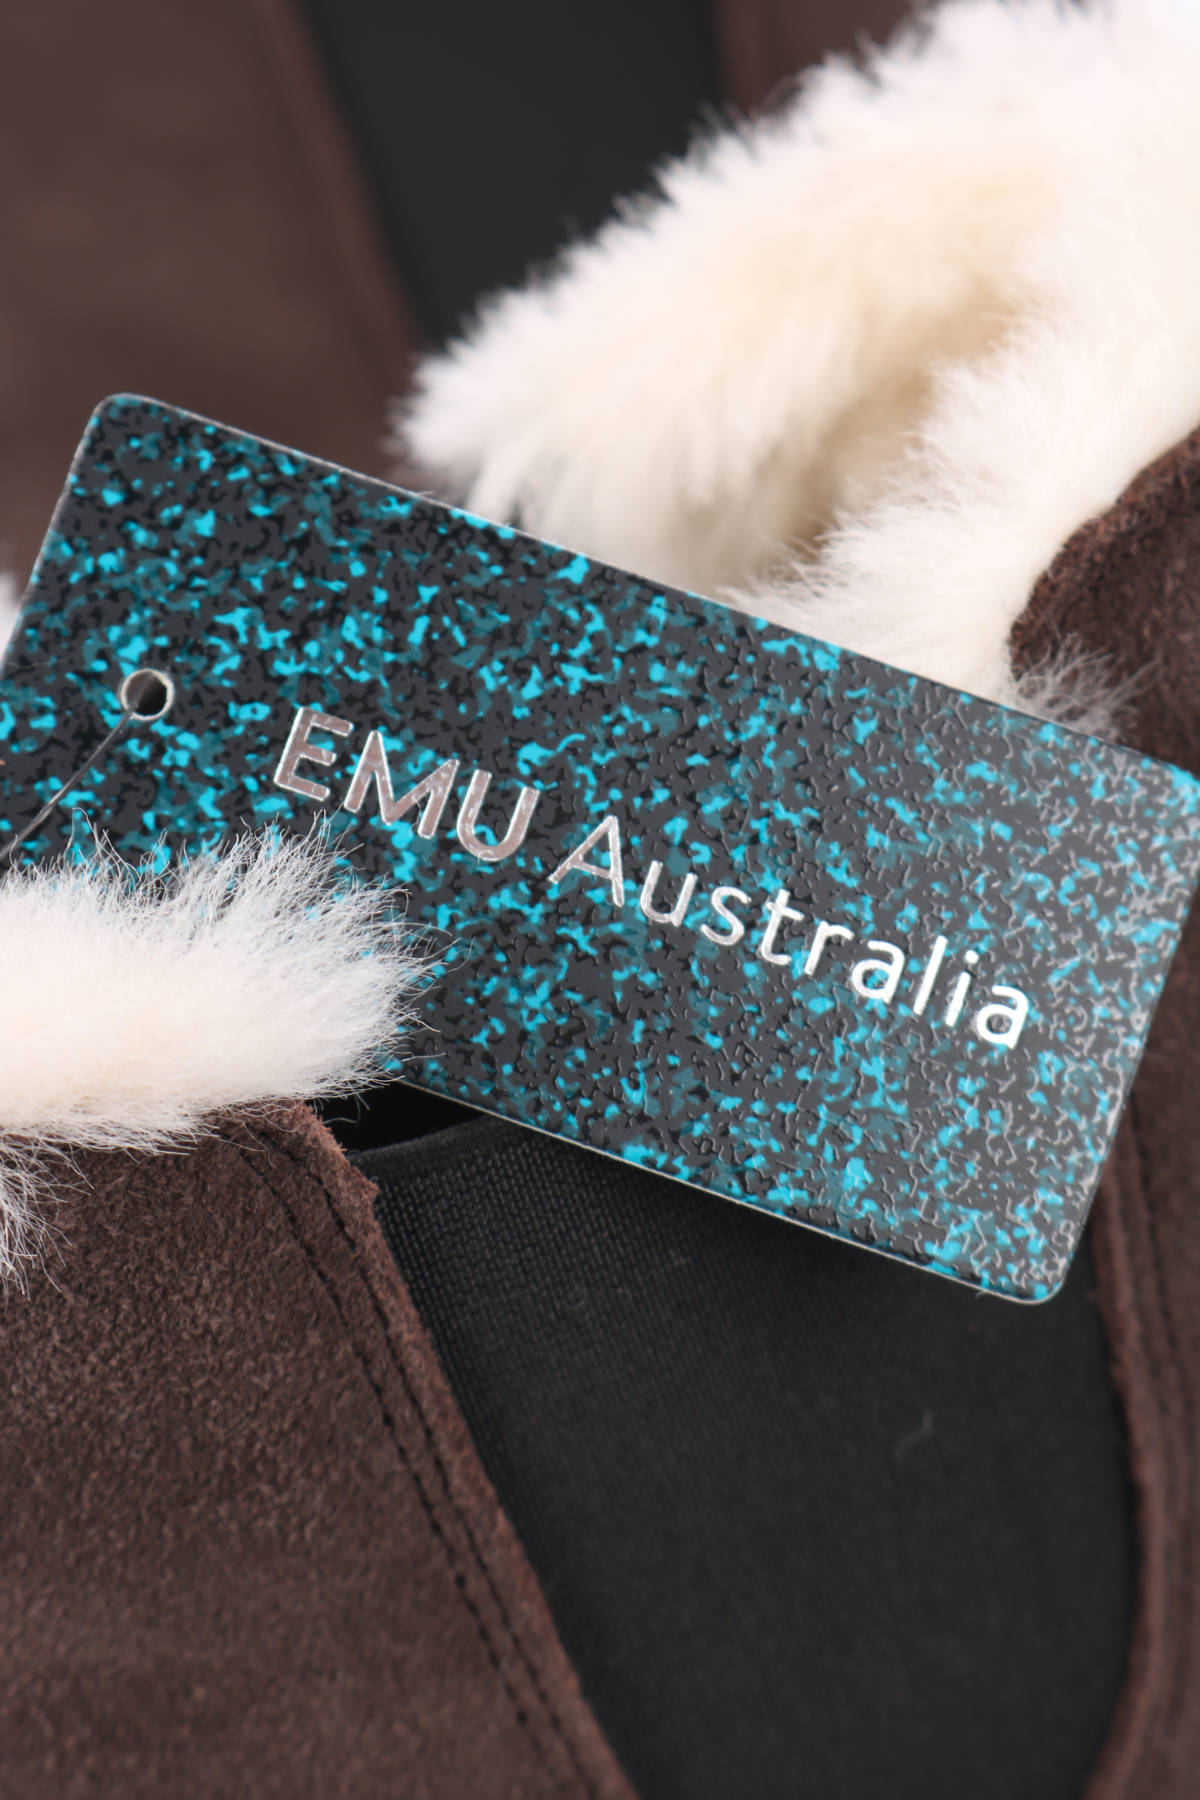 Боти EMU AUSTRALIA4